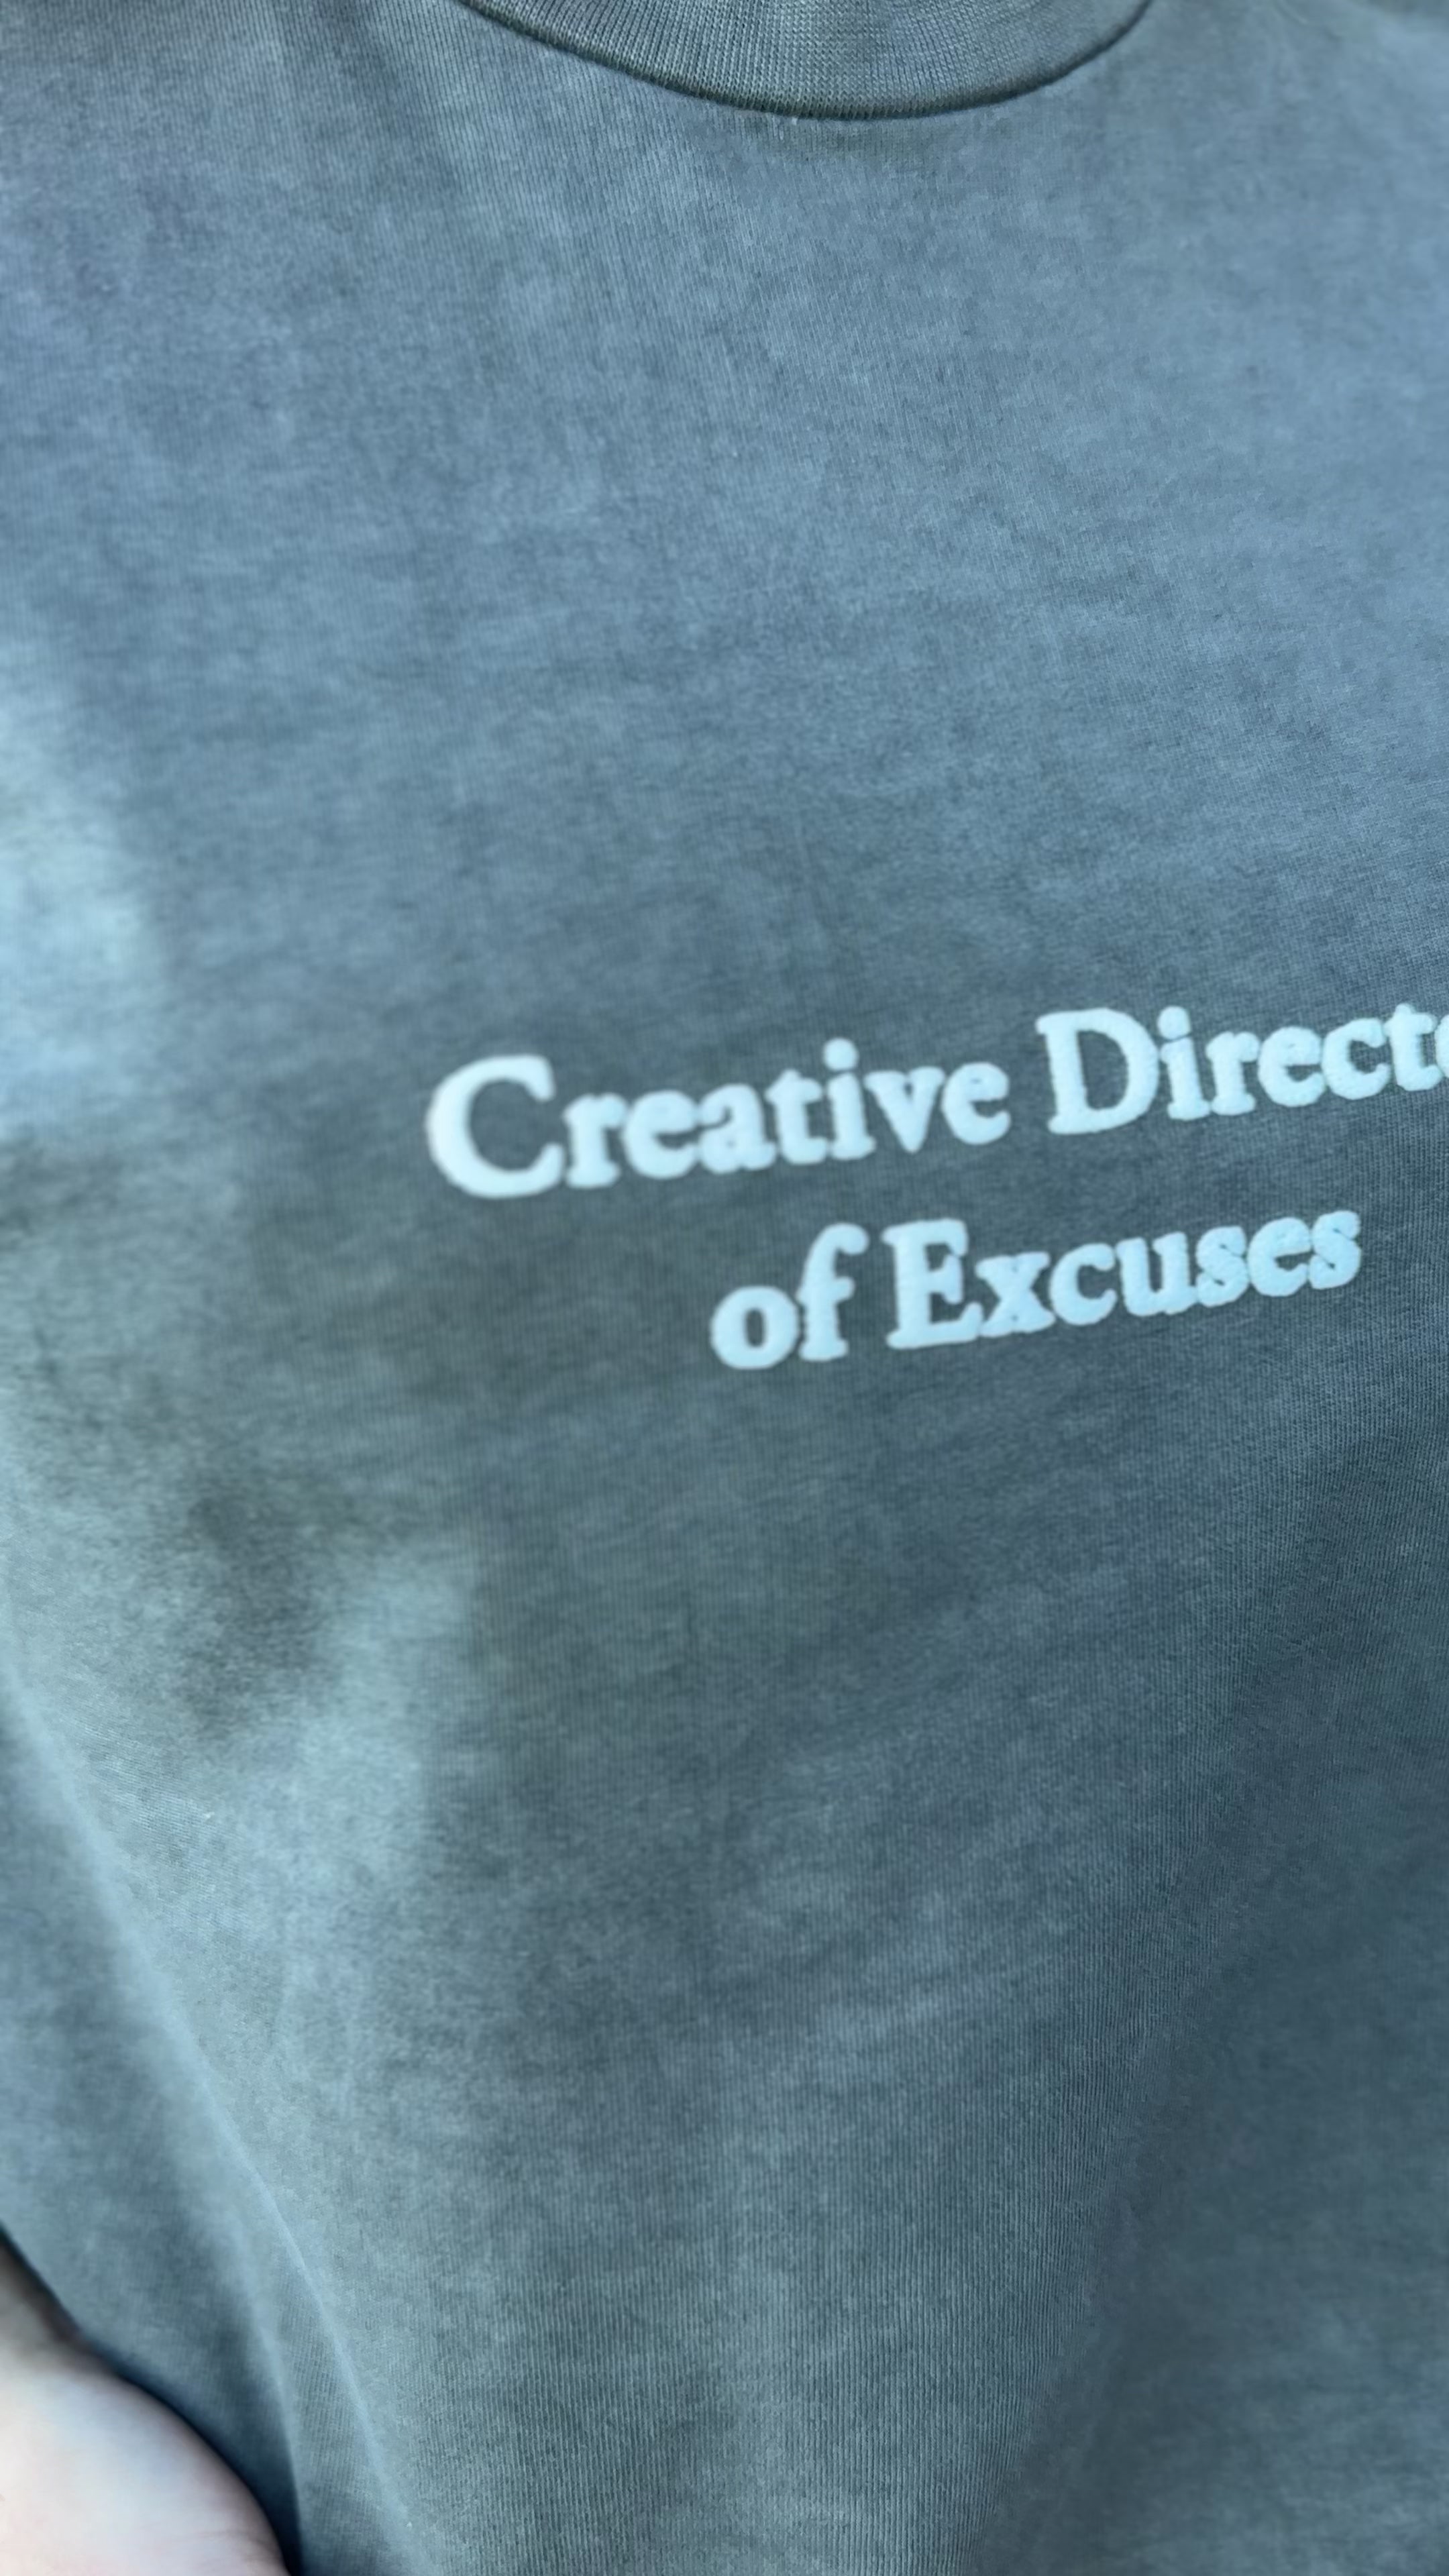 Creator Director of Excuses Smoked Gray Tshirt